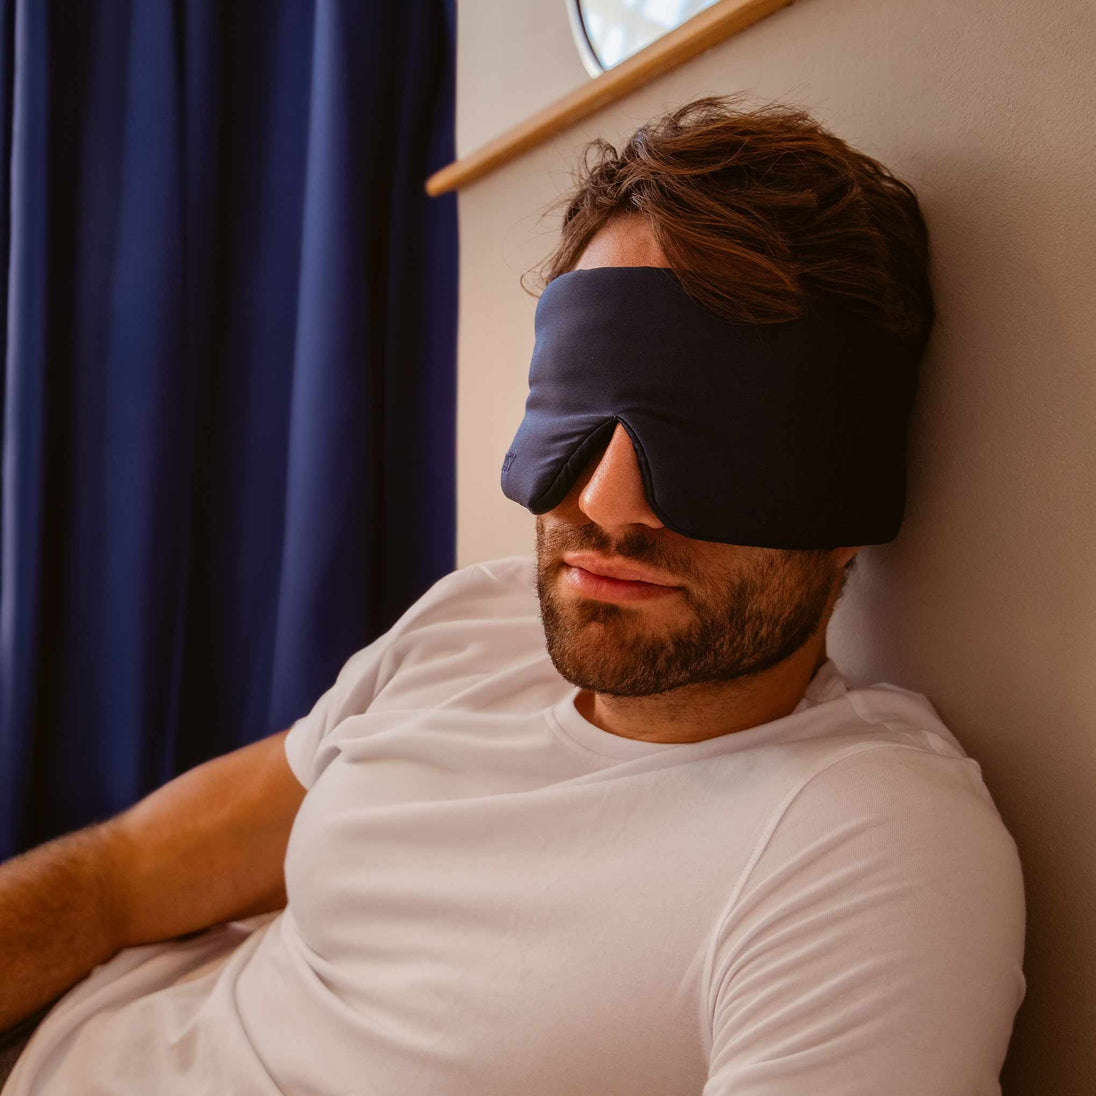 Sleep Mask, Eye Mask, Gritin Skin-friendly Blackout 3d Sleeping